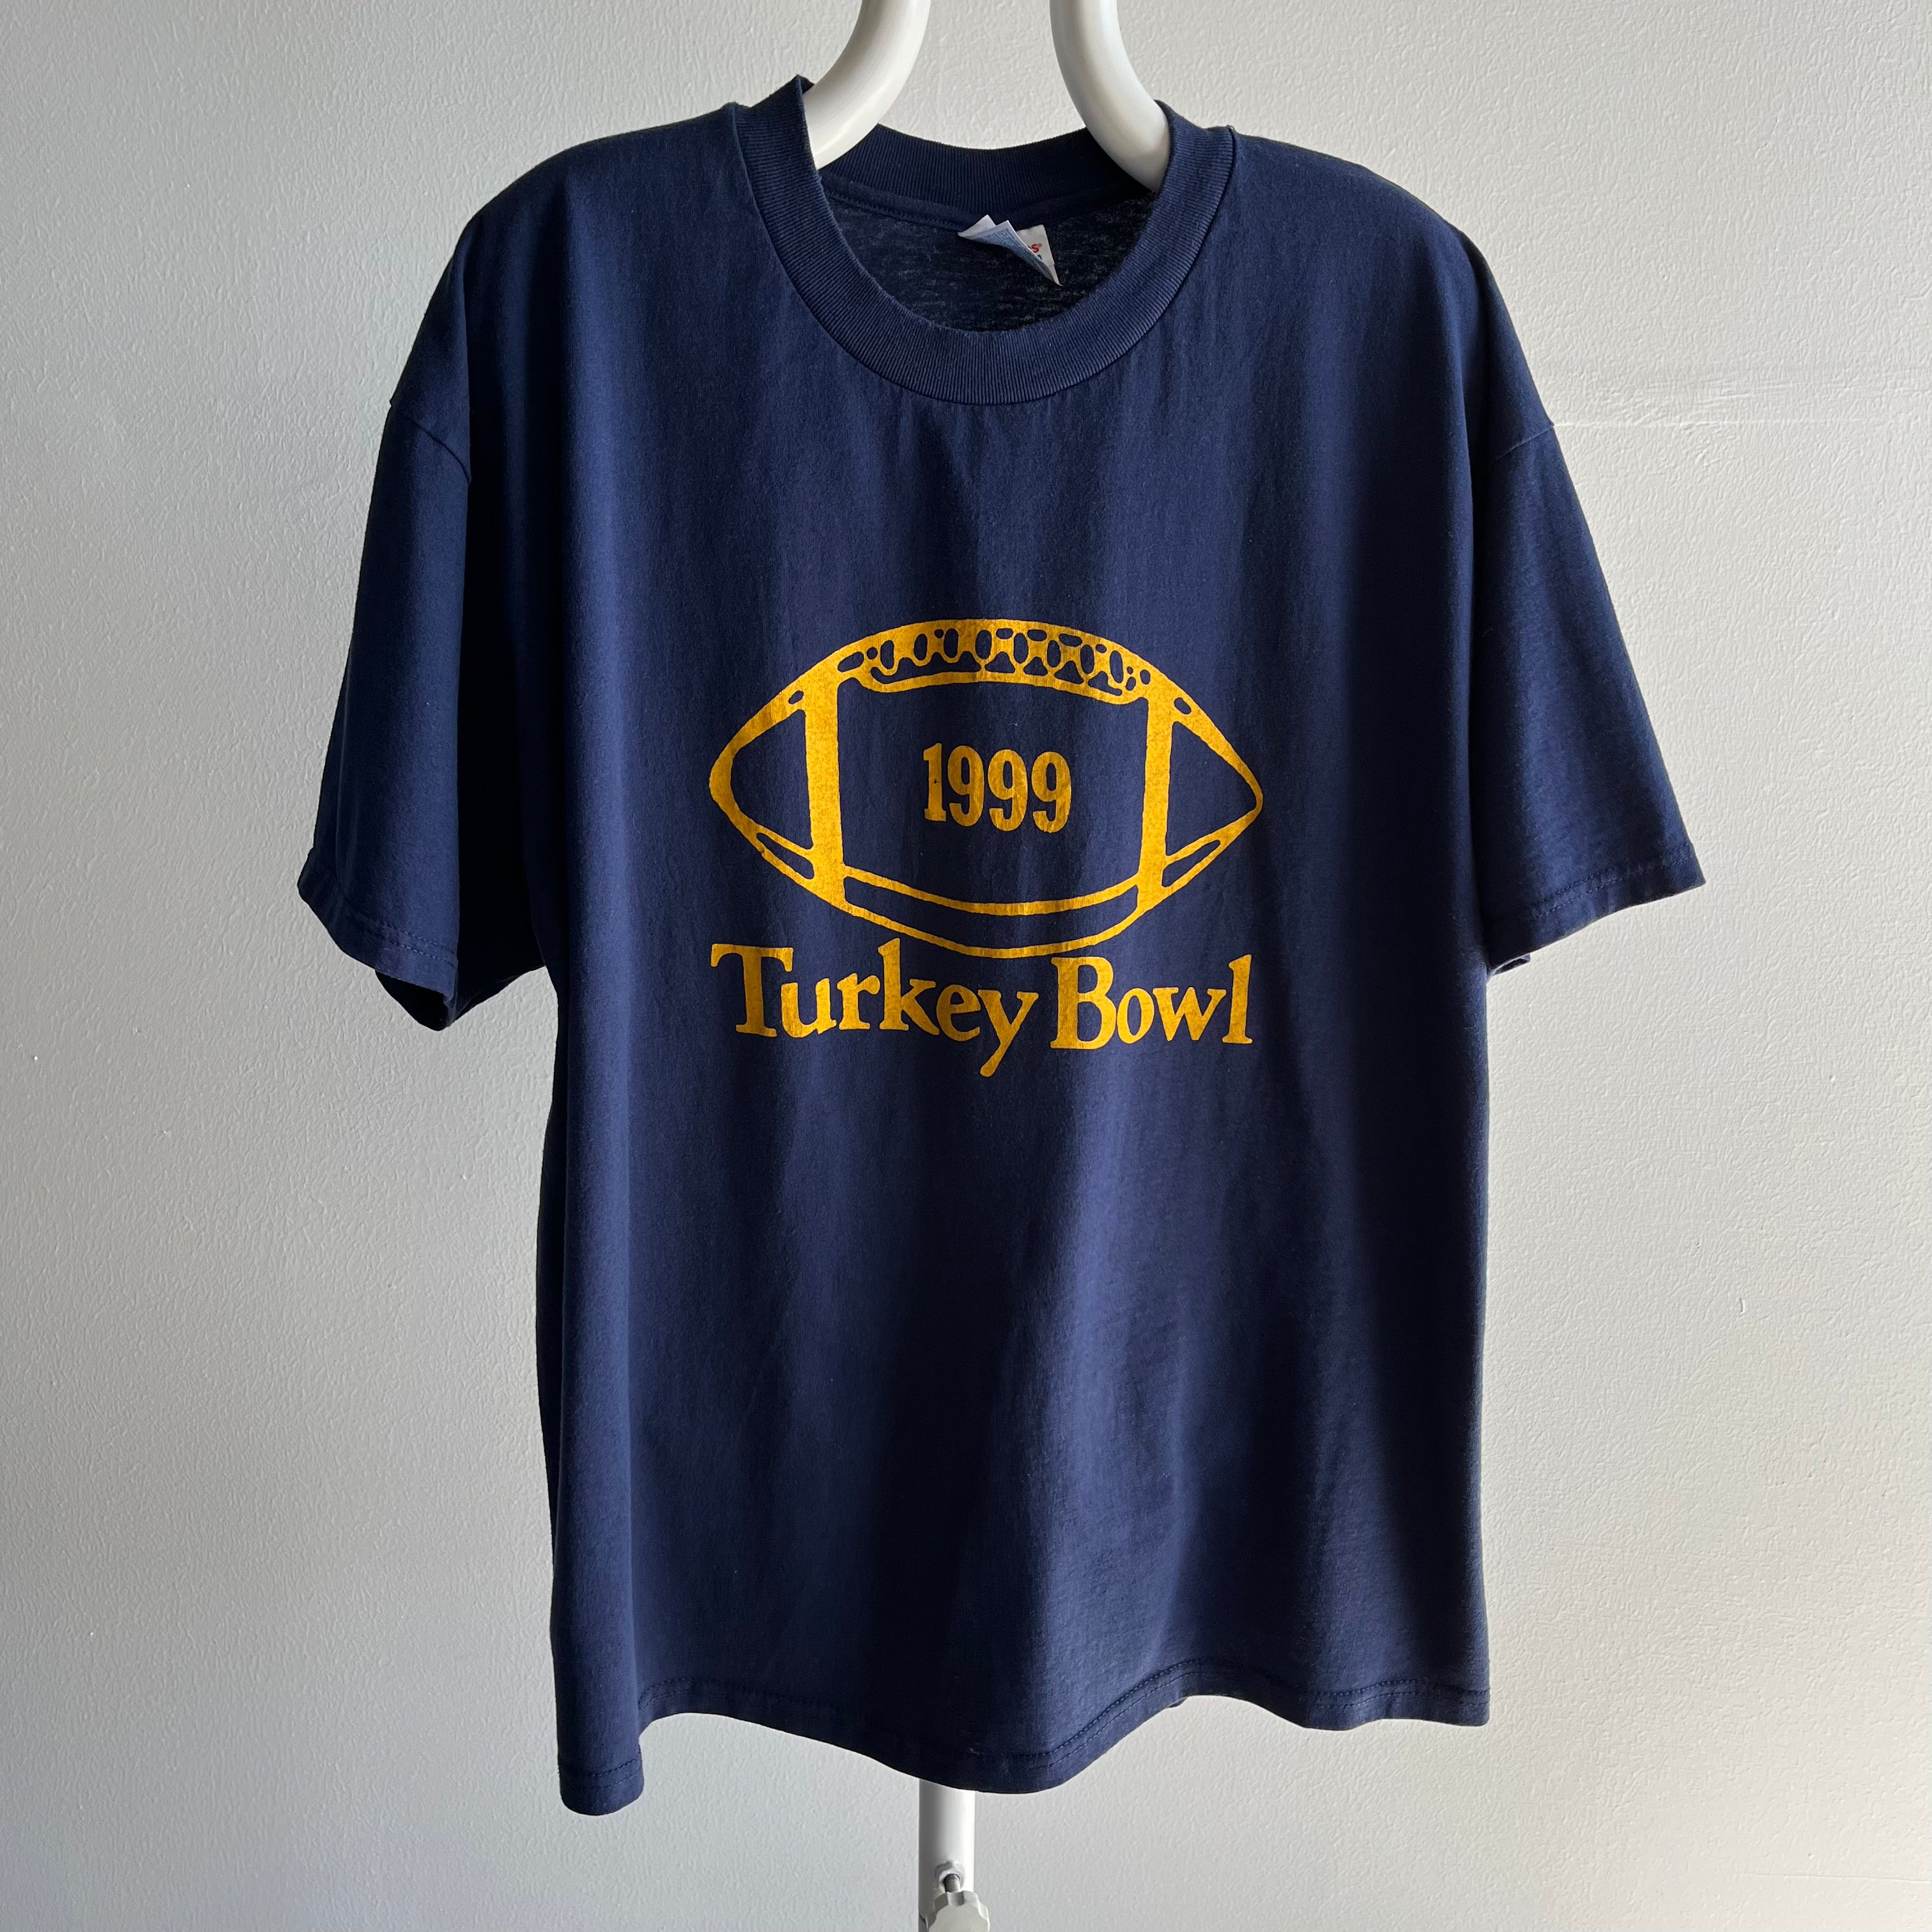 1999 Turkey Bowl T-Shirt